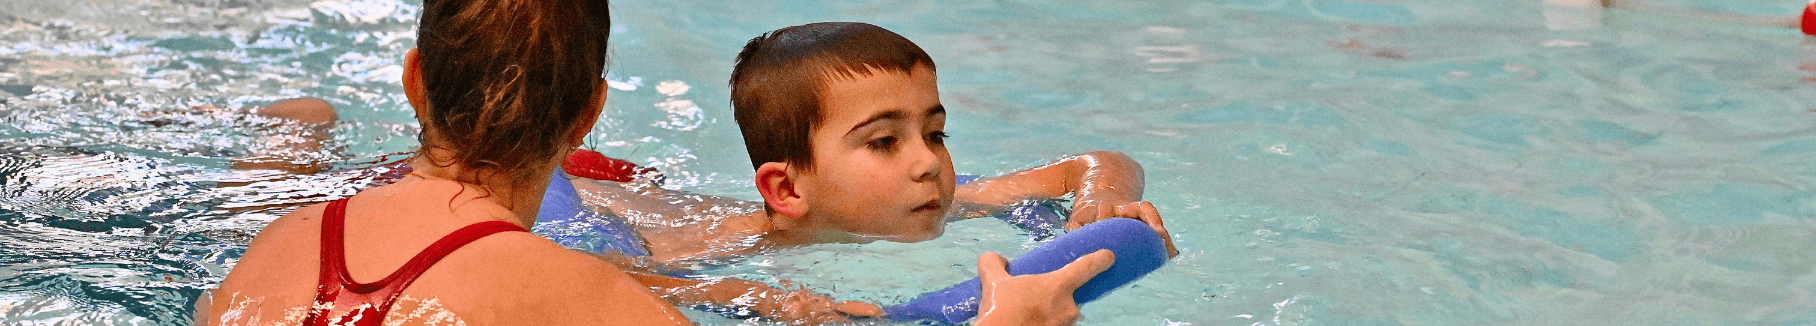 zwemles kind